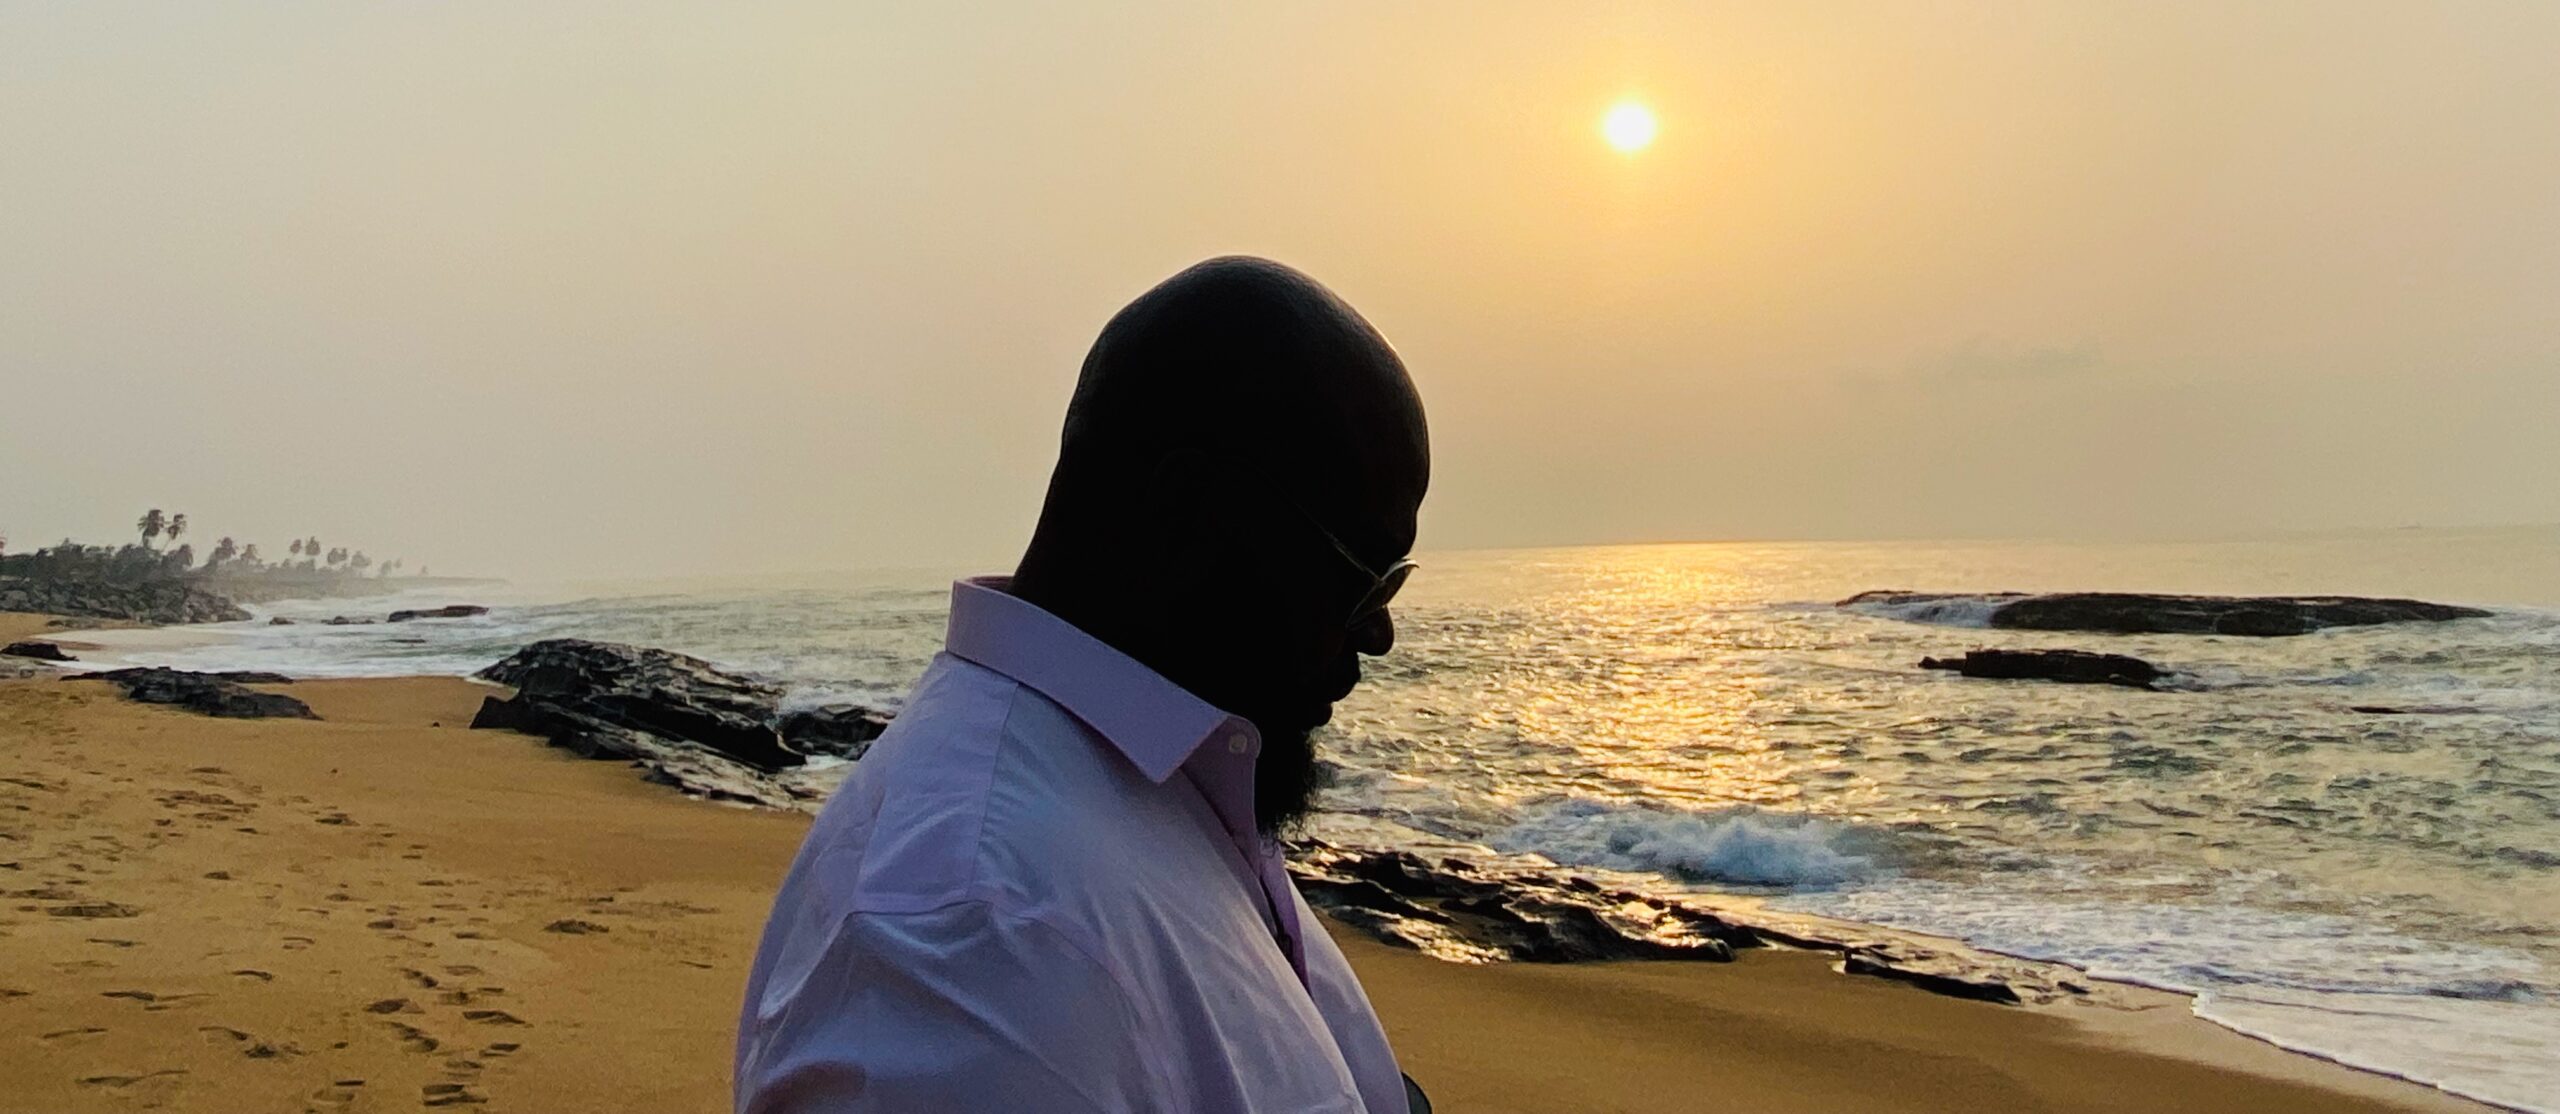 JOHN FOUNTAIN IN thought amid a setting sun off the coast of Ghana. (Photo: Monica Fountain)